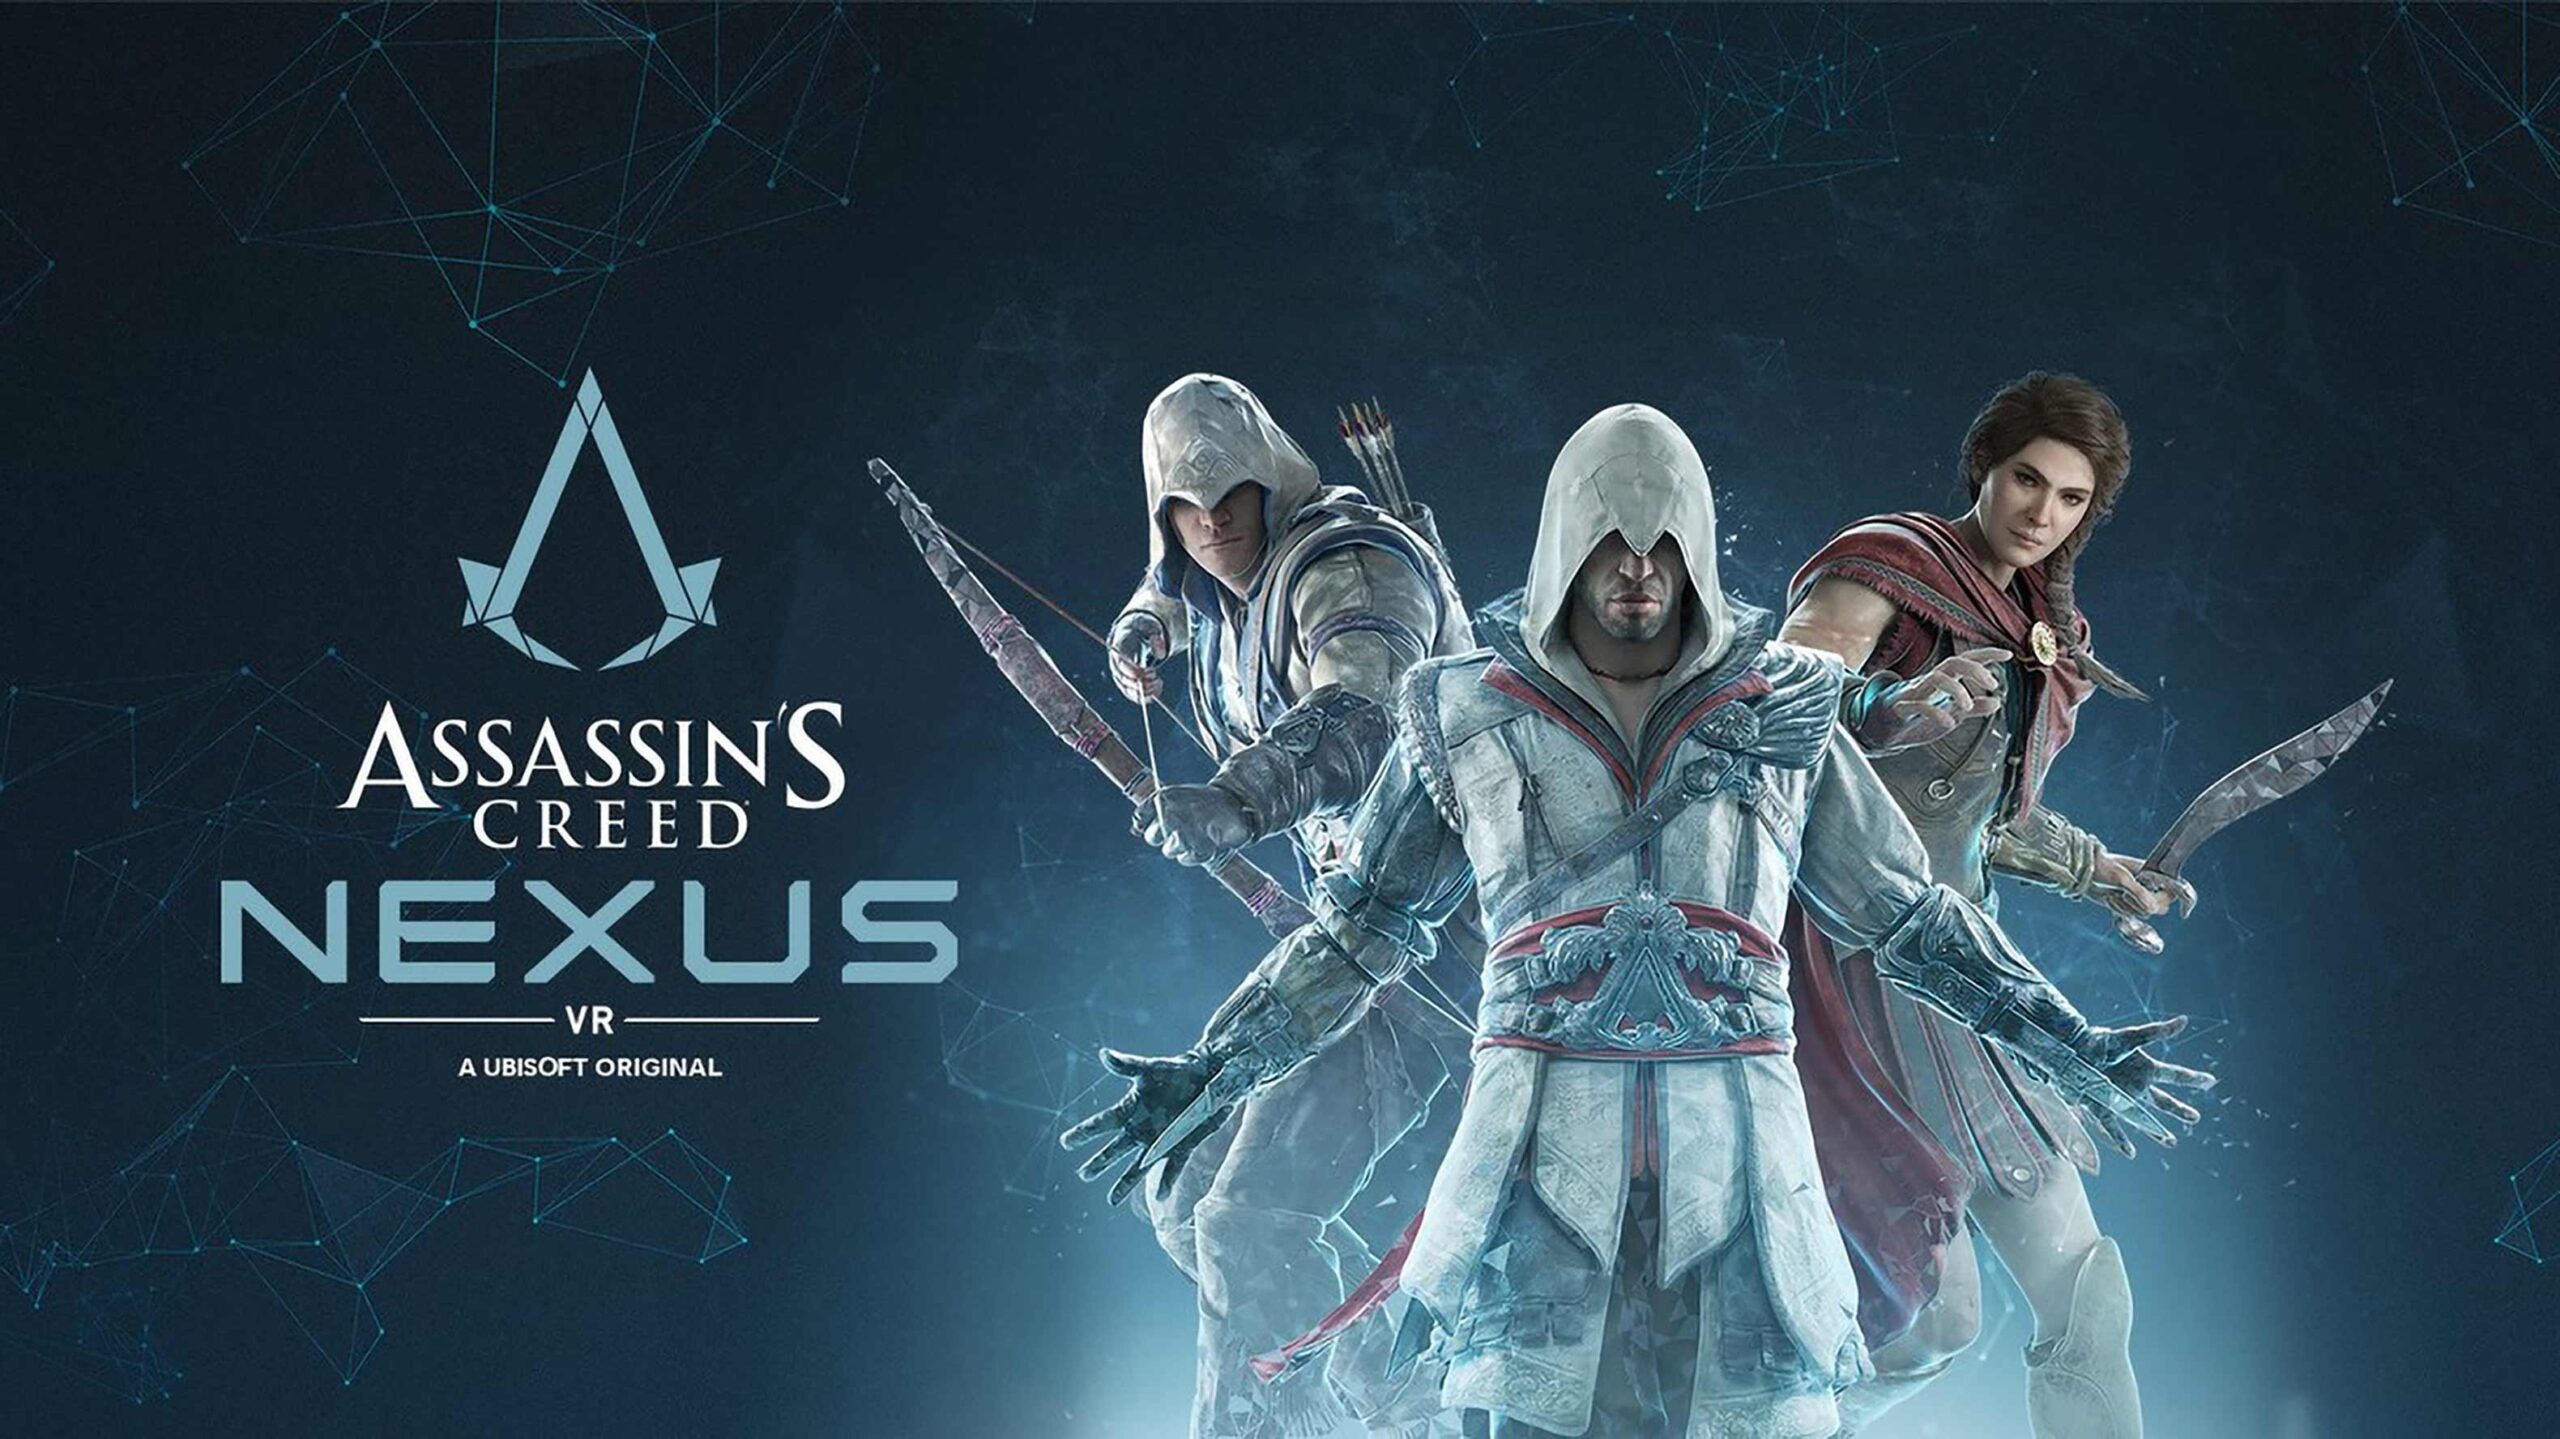  Official Assassins Creed 2022 Wall Calendar, January